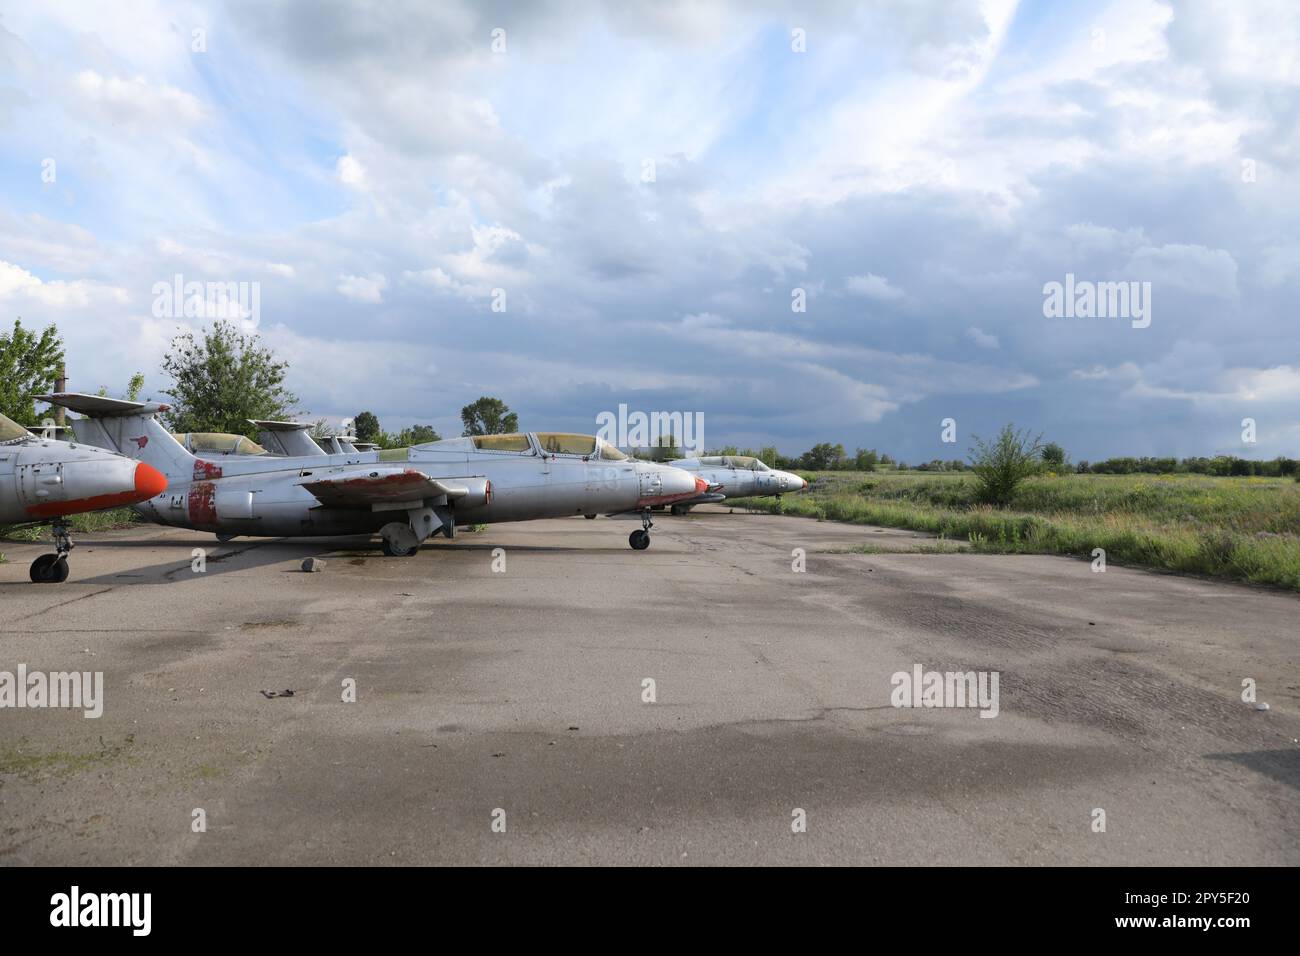 abandoned damaged russian military airplane Aero L-29 Delfine Stock Photo